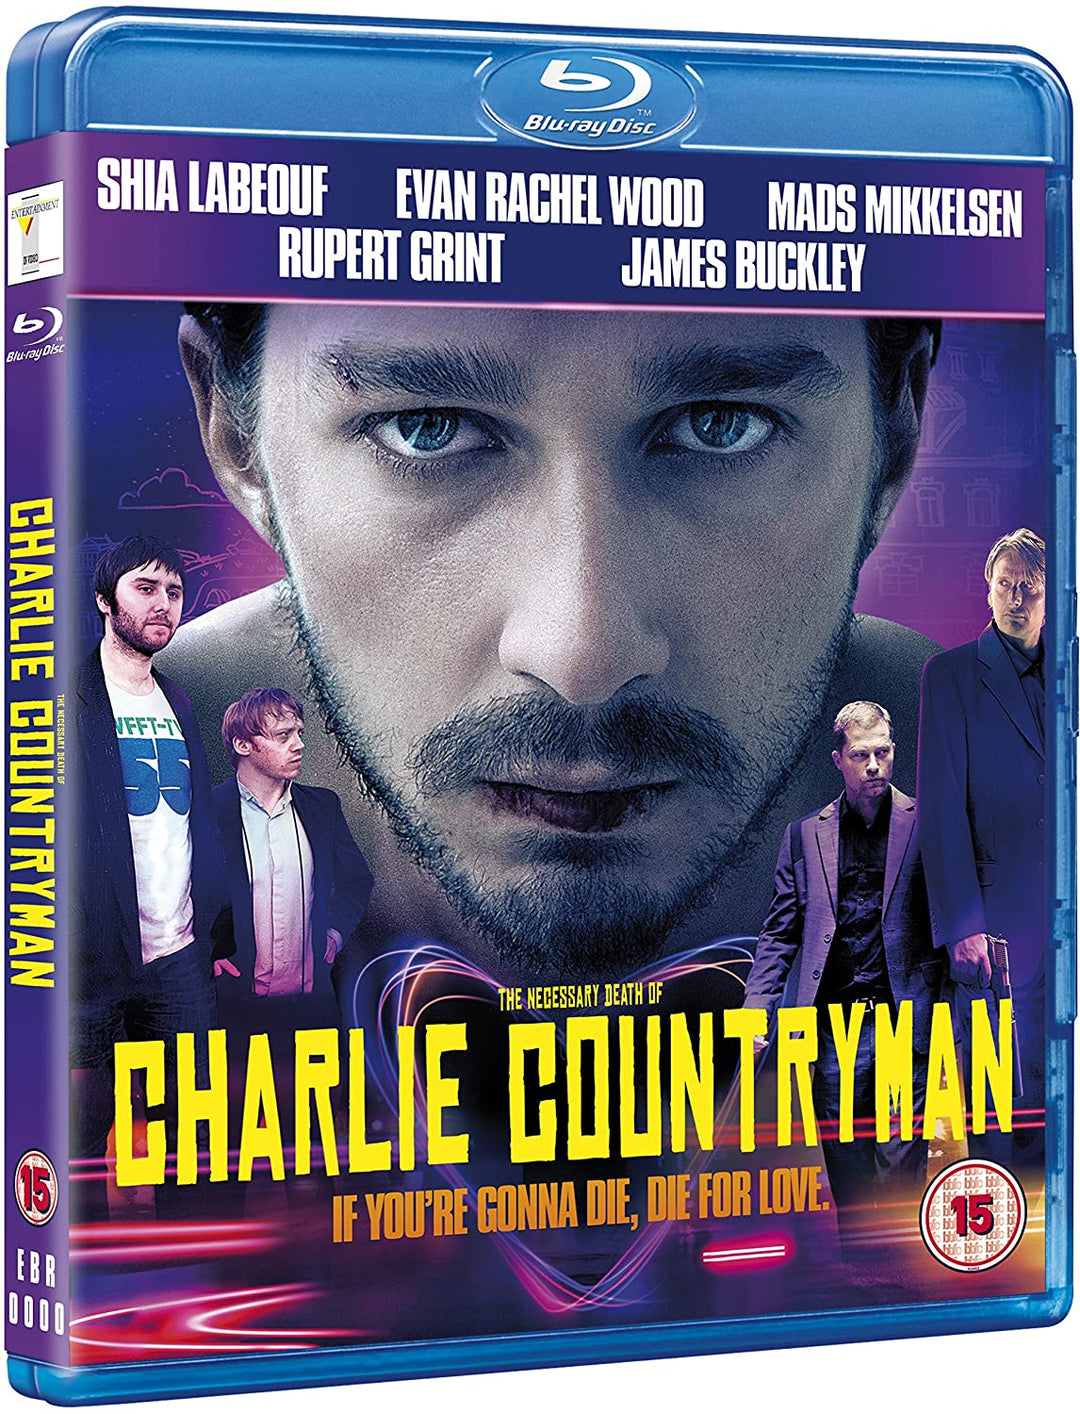 The Necessary Death Of Charlie Countryman [2017] - Romance/Drama [Blu-Ray]